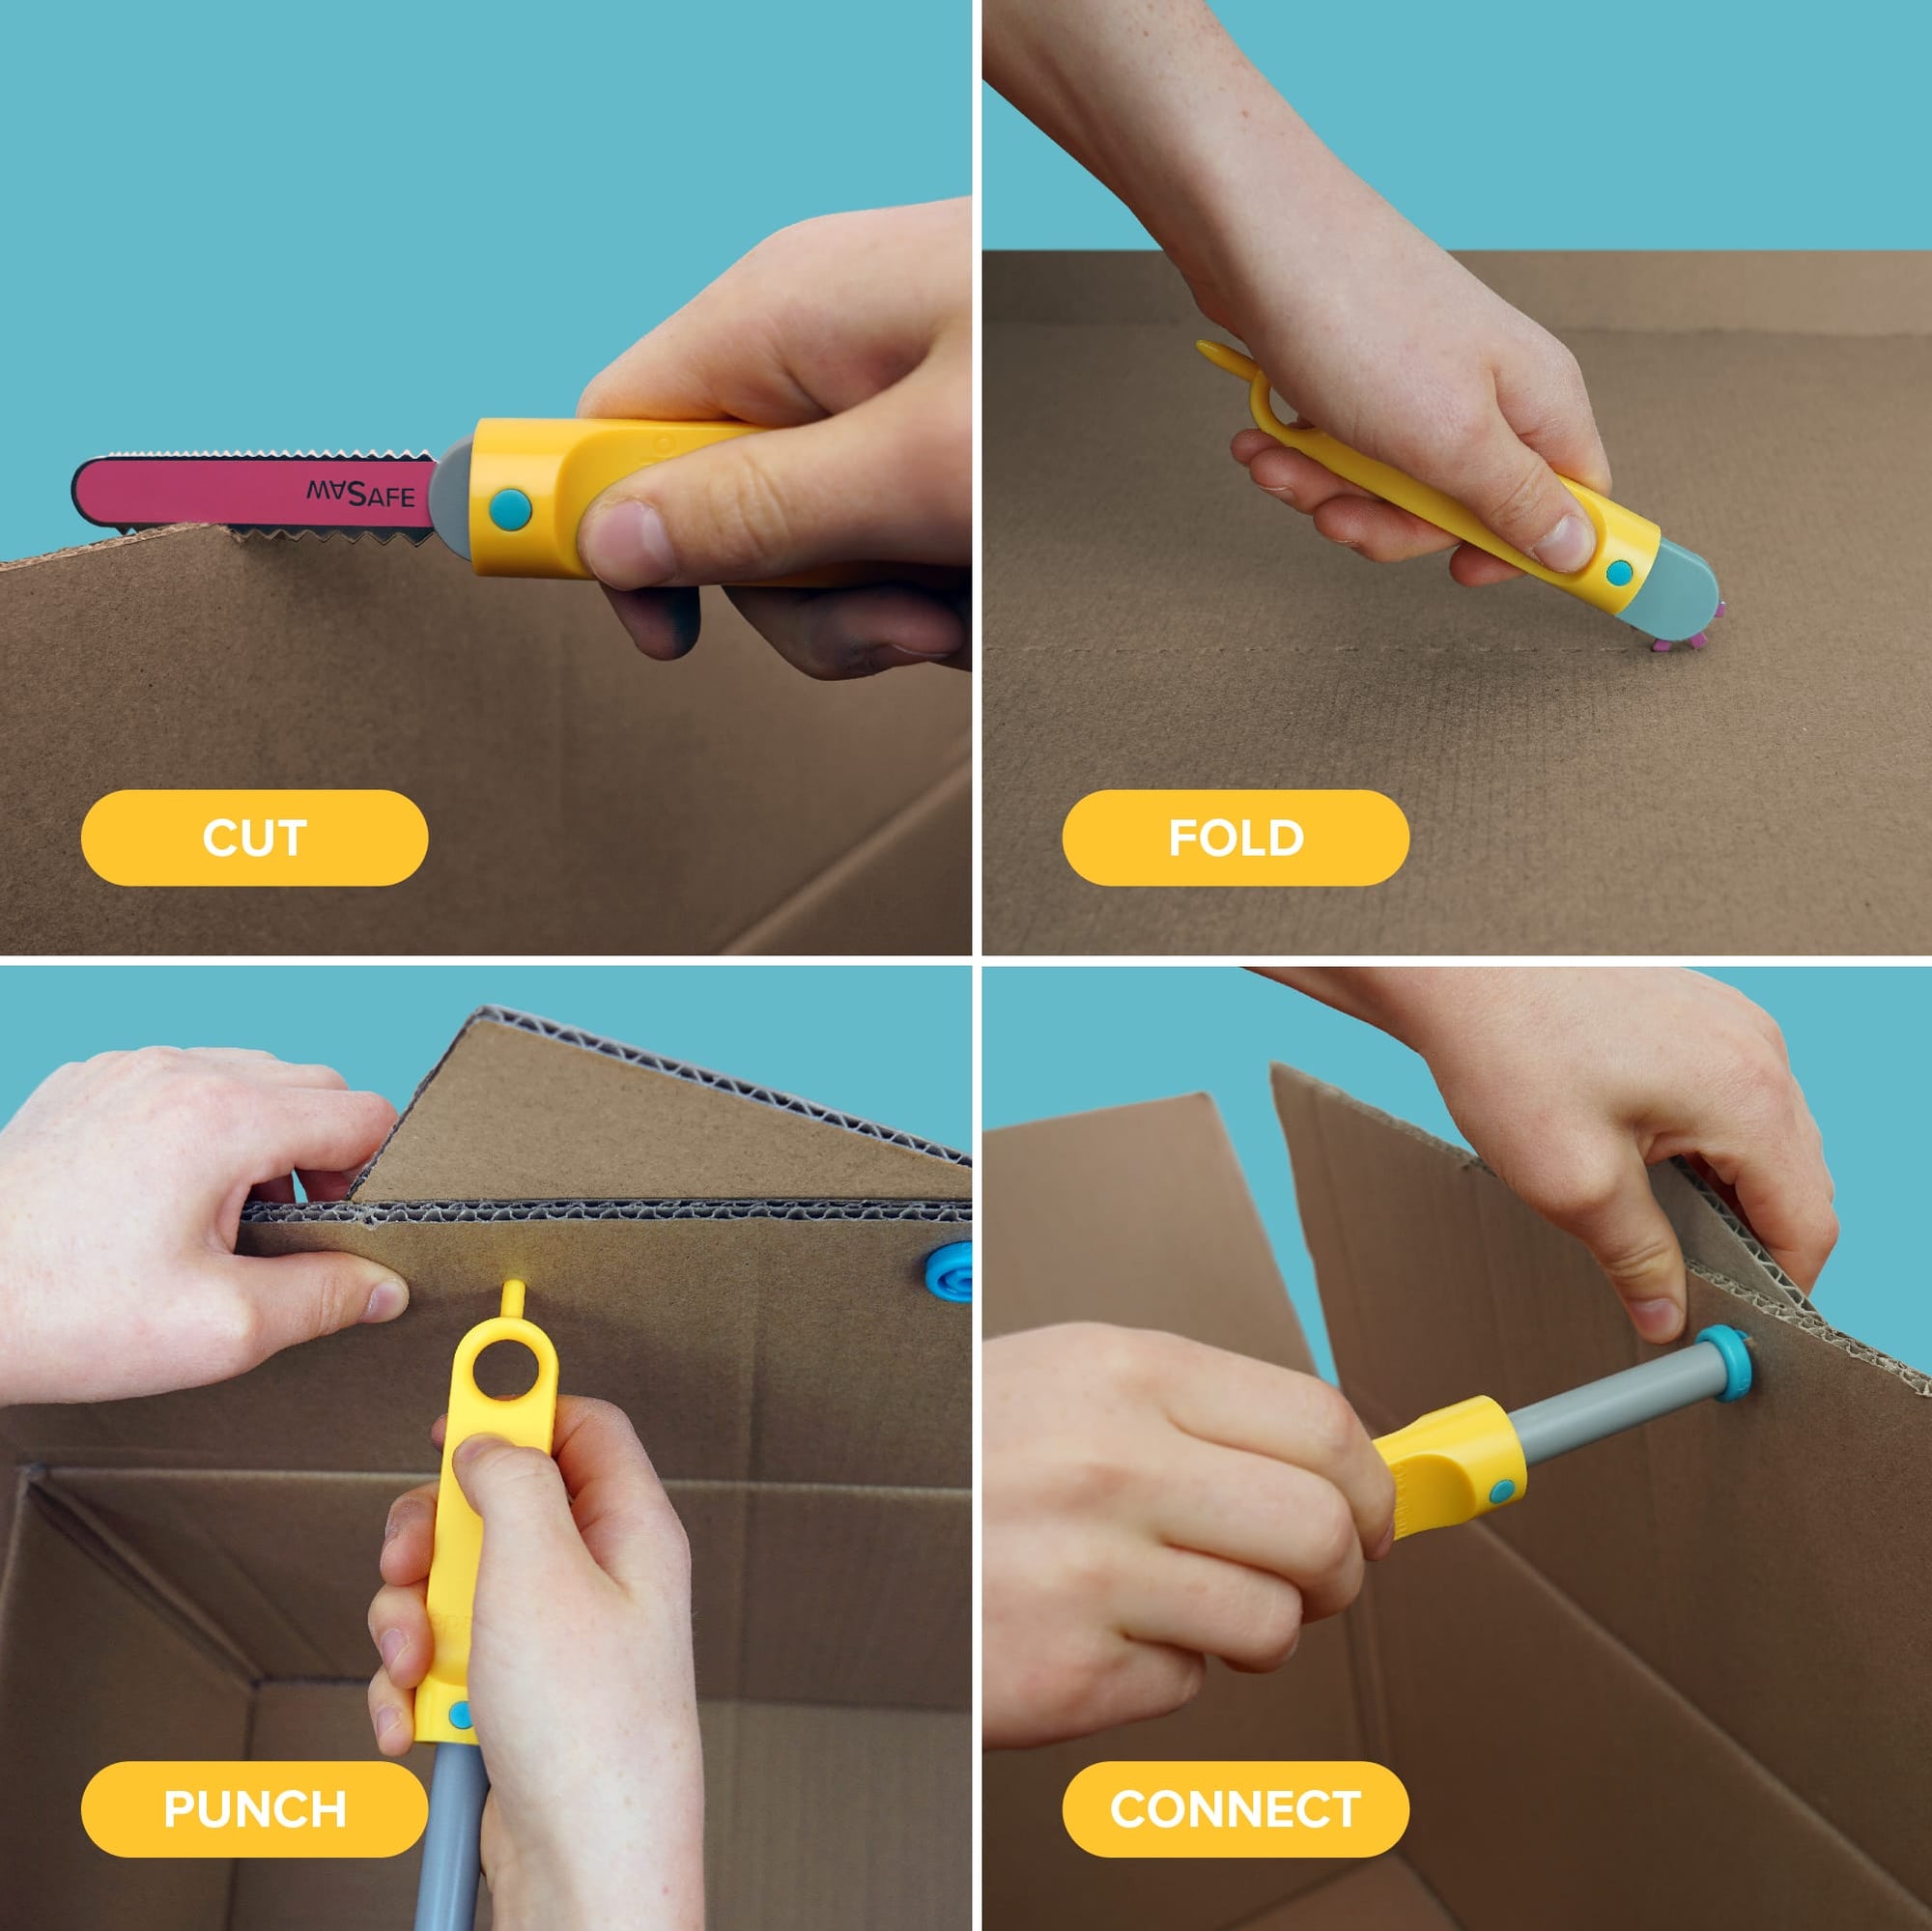 makedo Classroom Bundle INVENT Kits- New! — Robotix Education